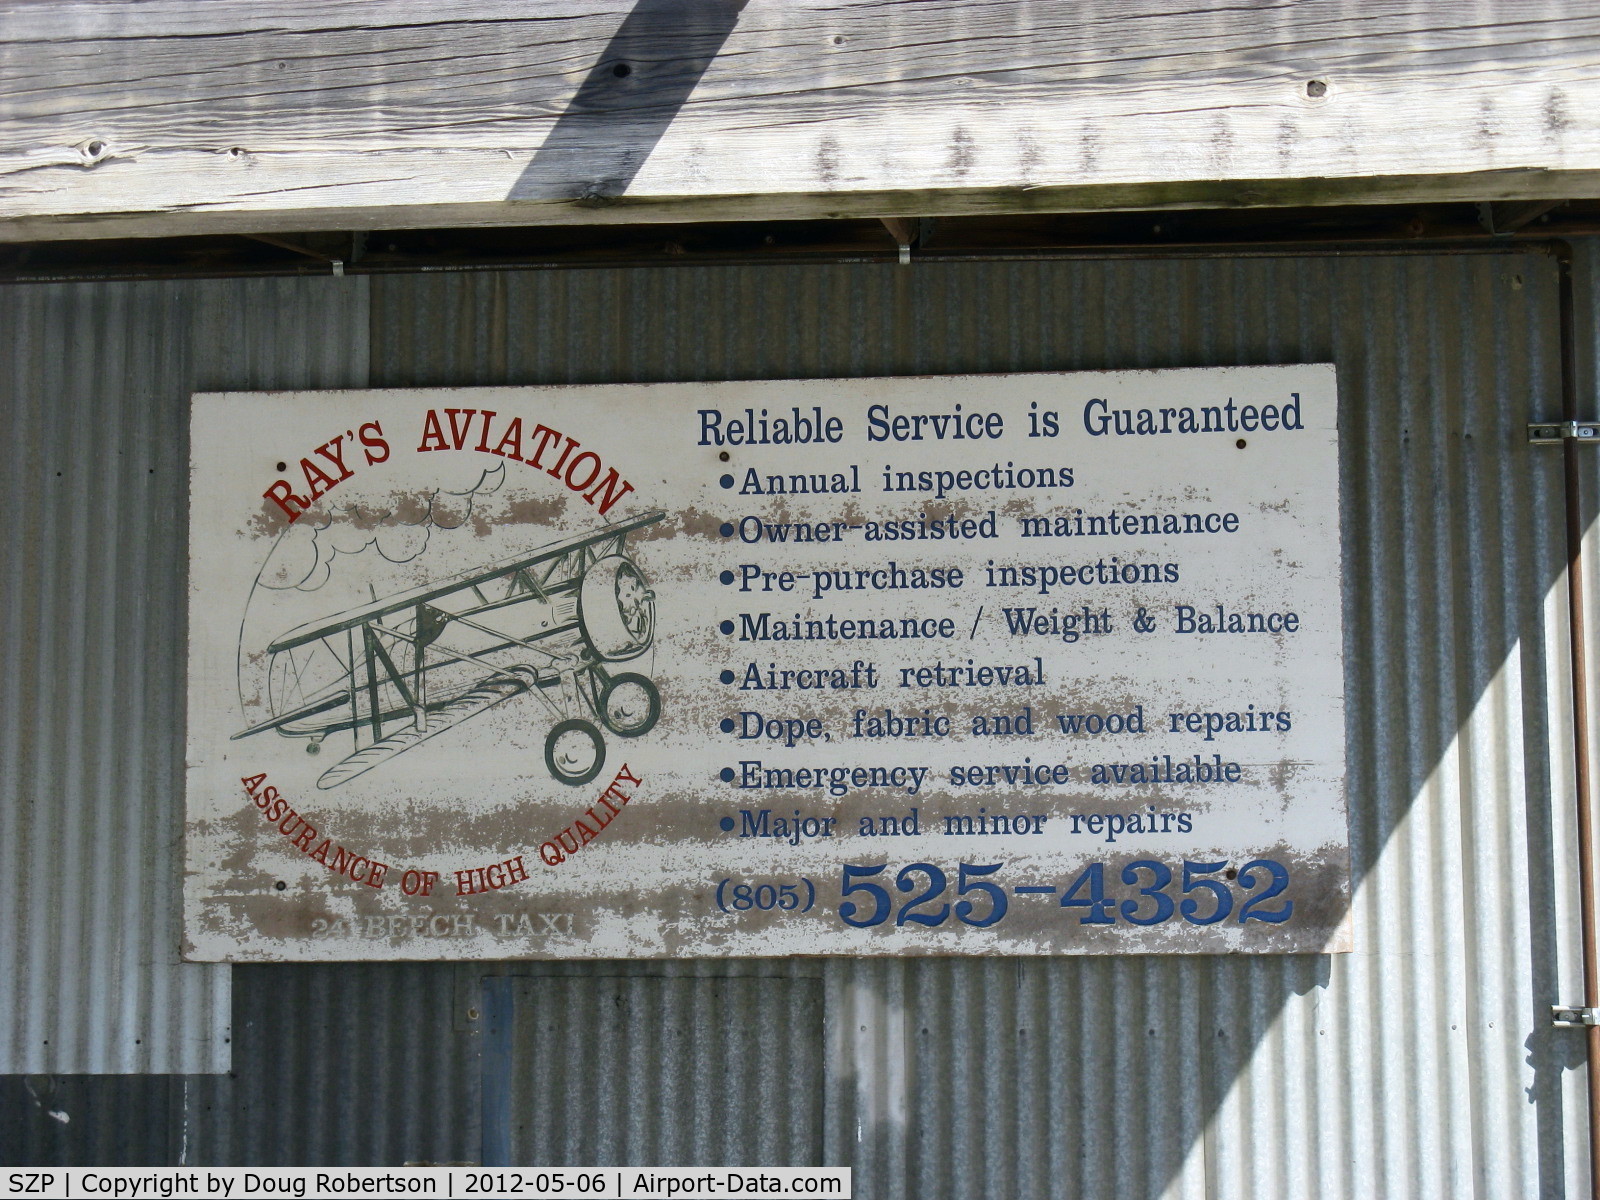 Santa Paula Airport (SZP) - Ray's Aviation, Maintenance & Repair services